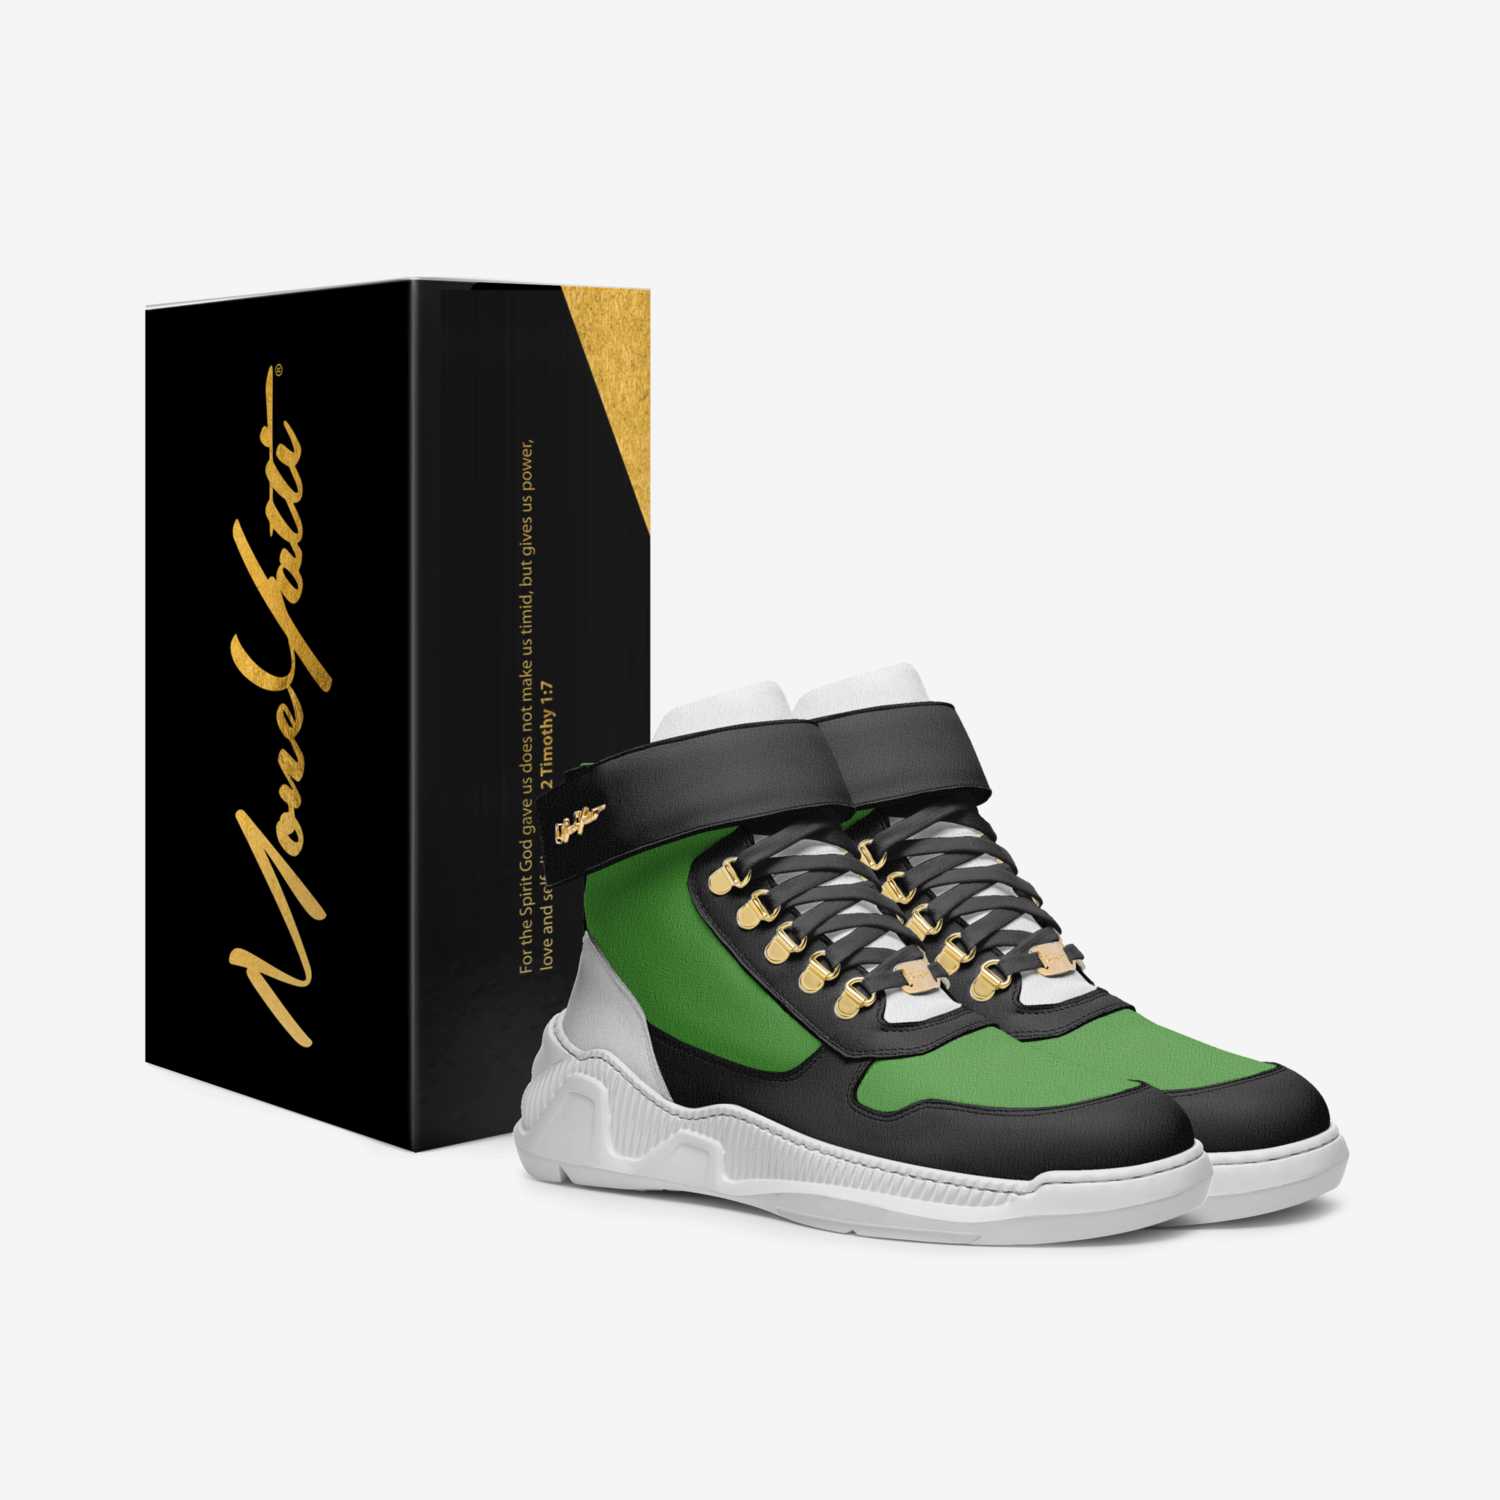 Moneyatti Traps40c custom made in Italy shoes by Moneyatti Brand | Box view